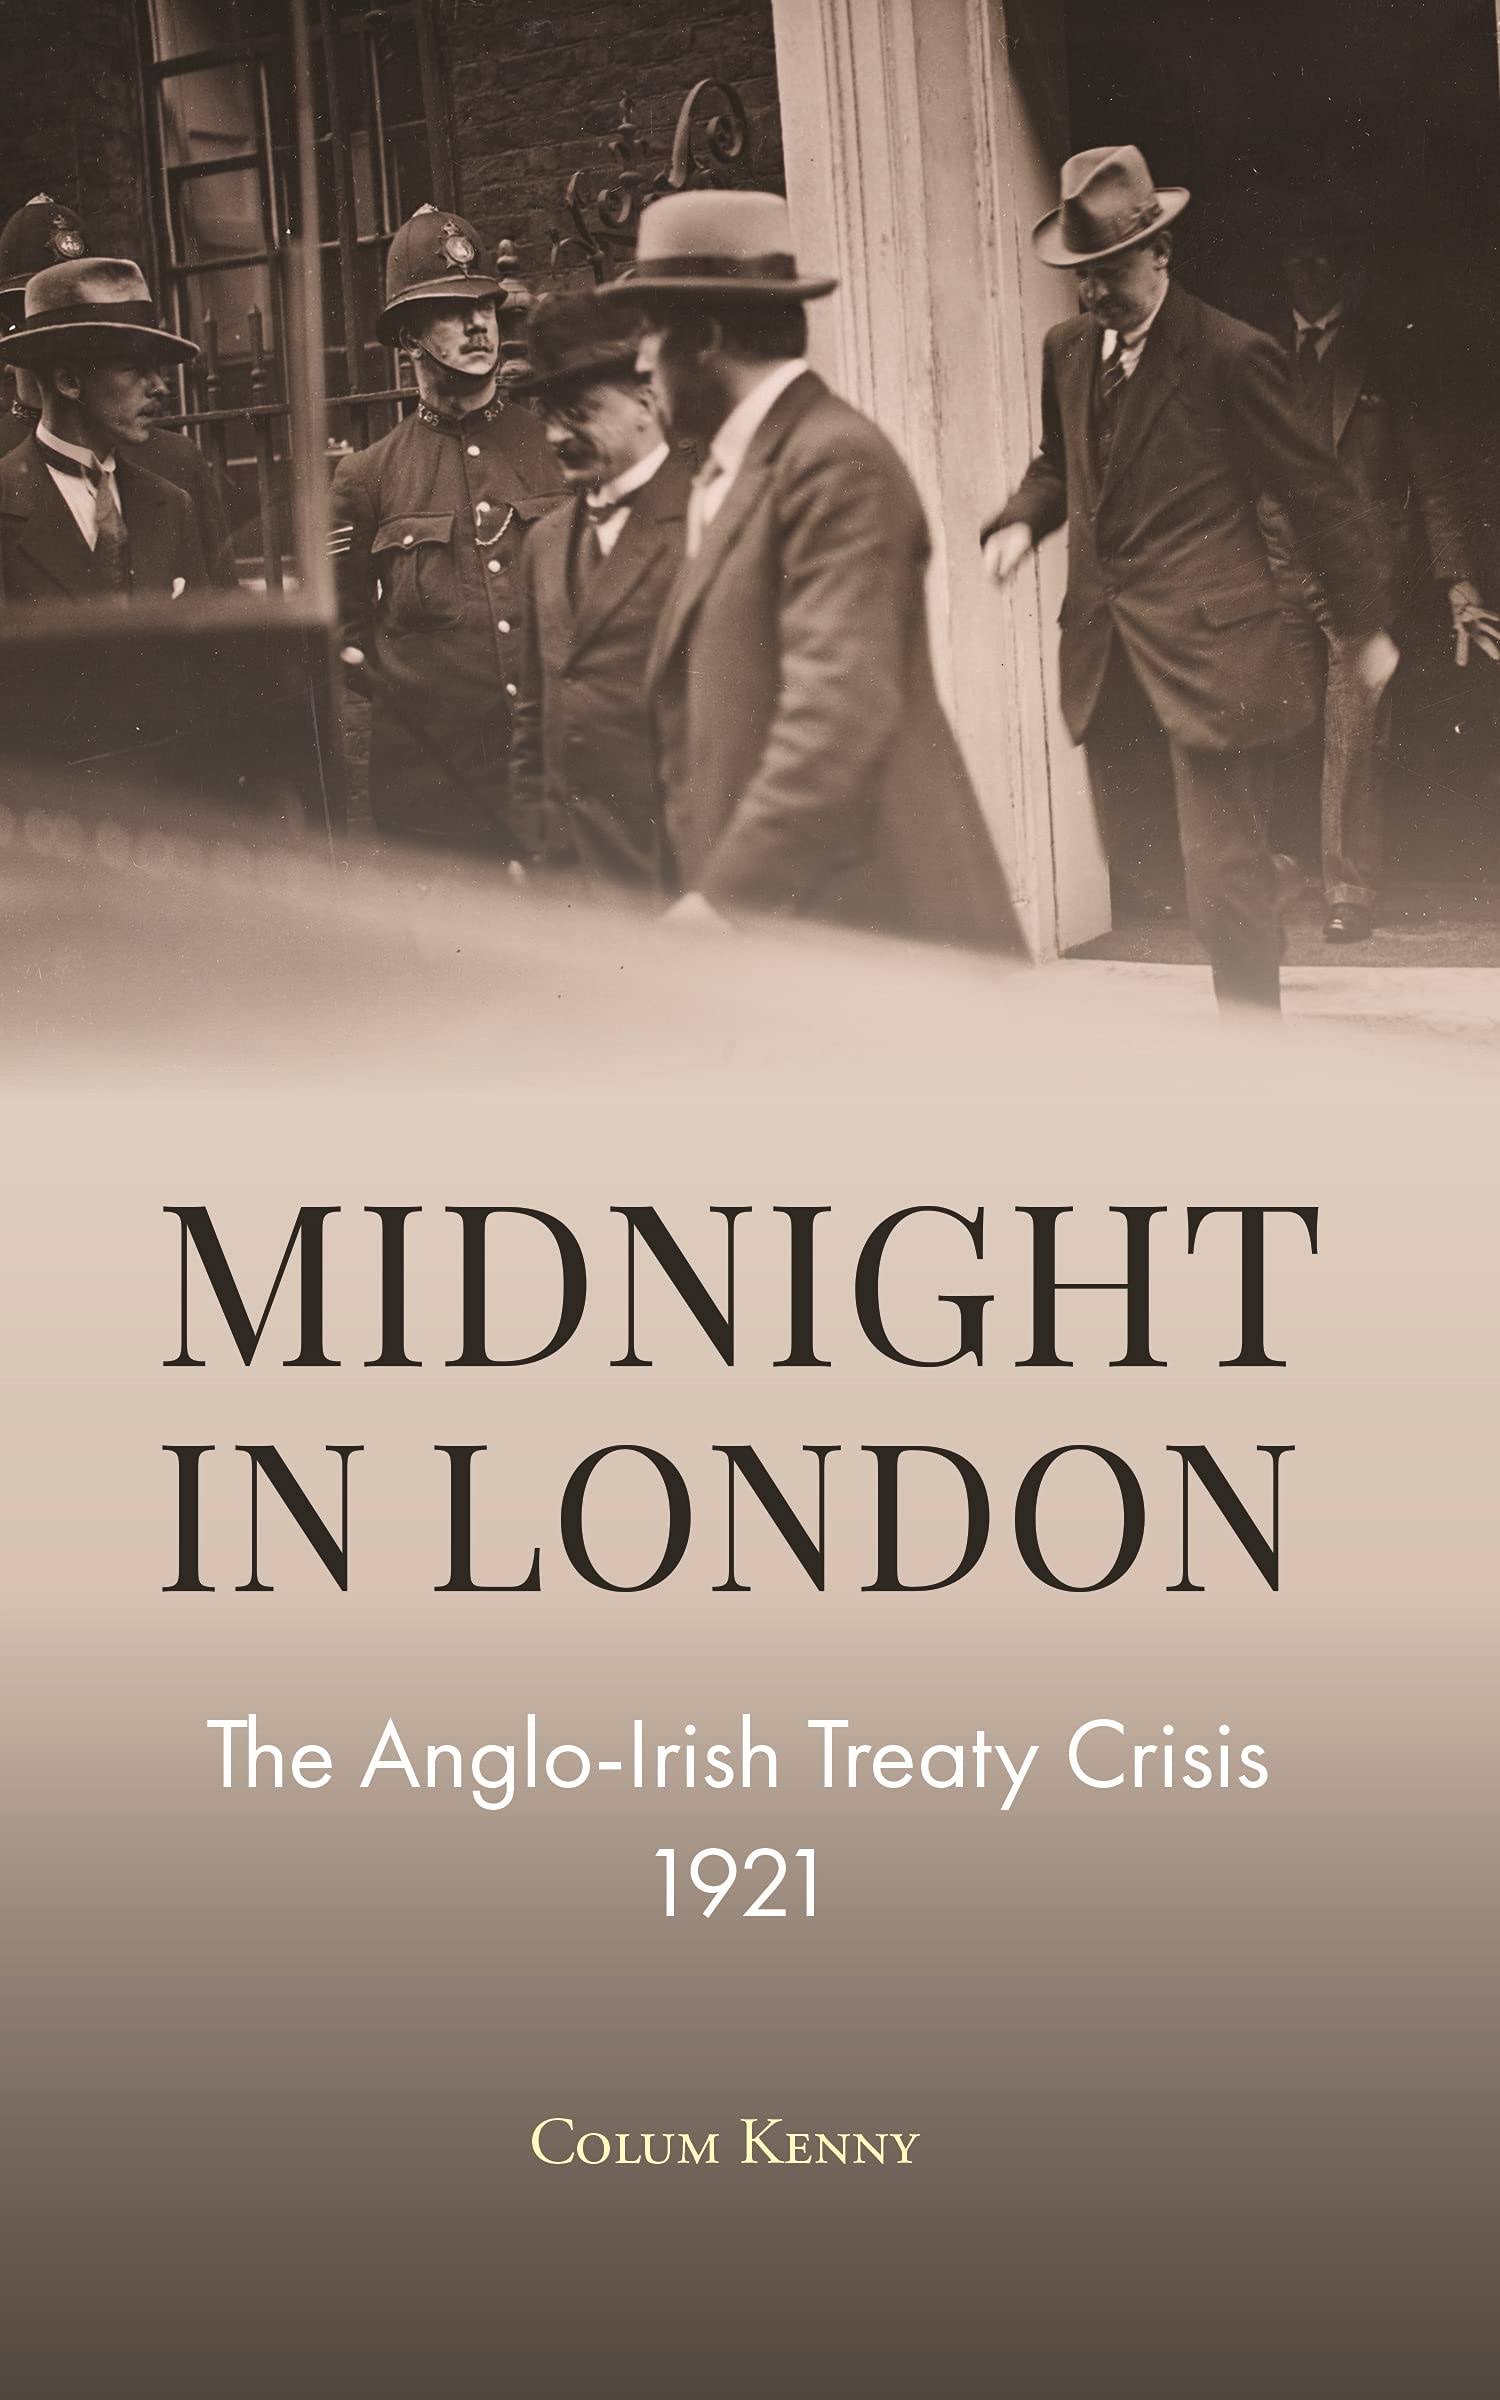 Midnight in London: The Anglo-Irish Treaty Crisis 1921 [Book]